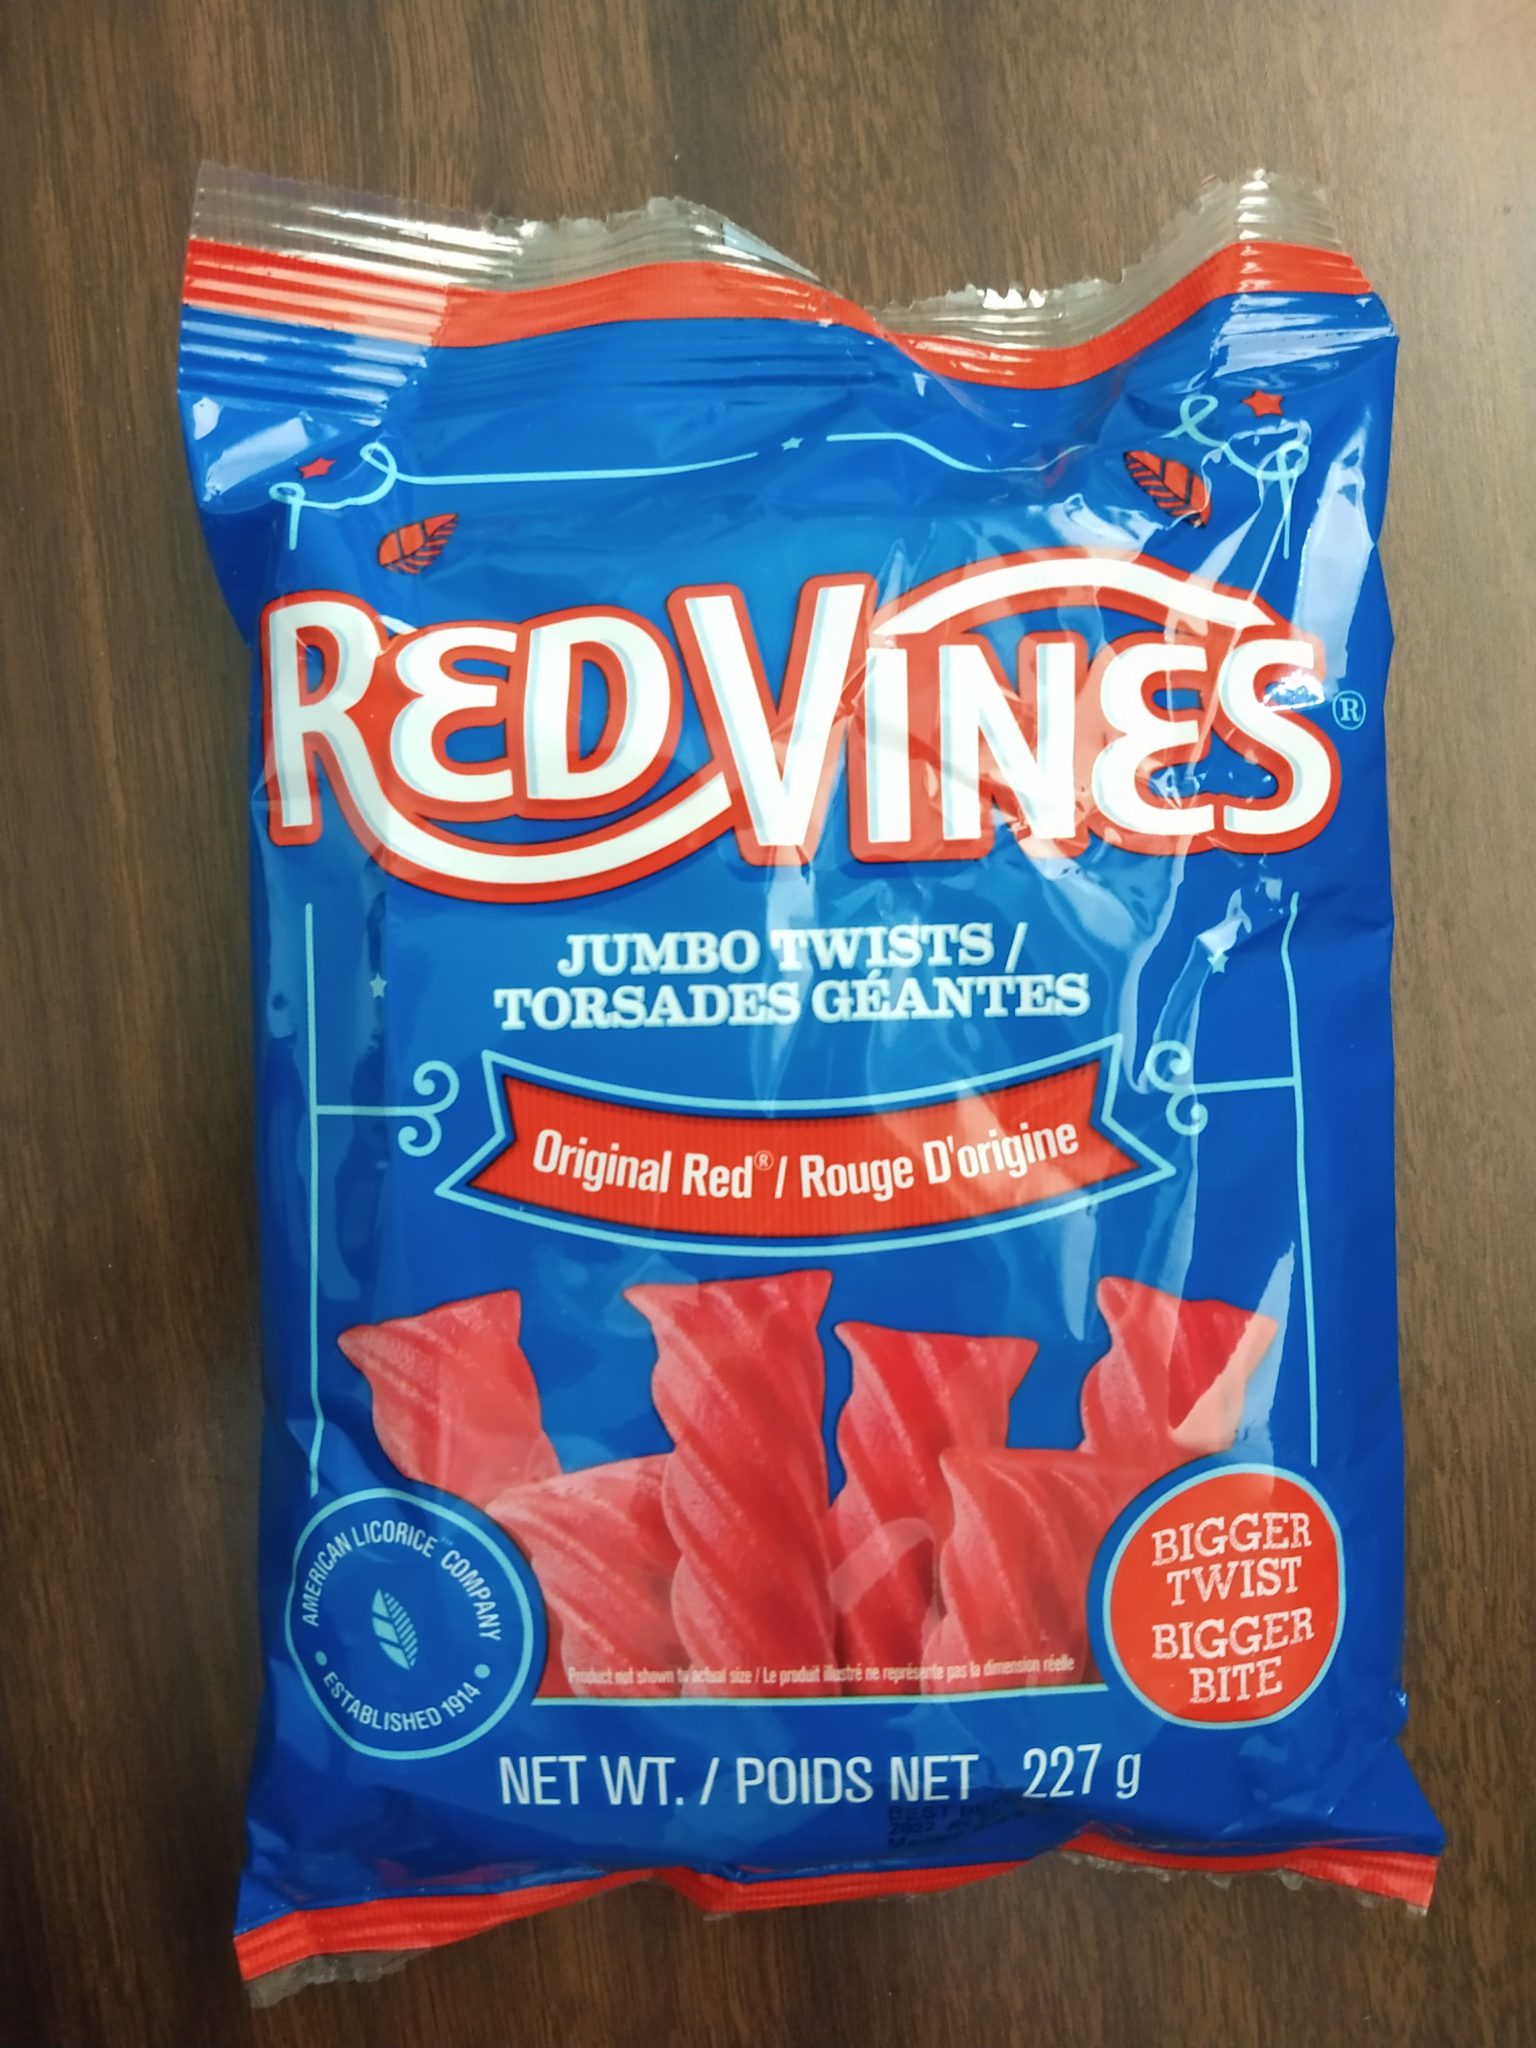 Red Vines – Original Red Jumbo Twists